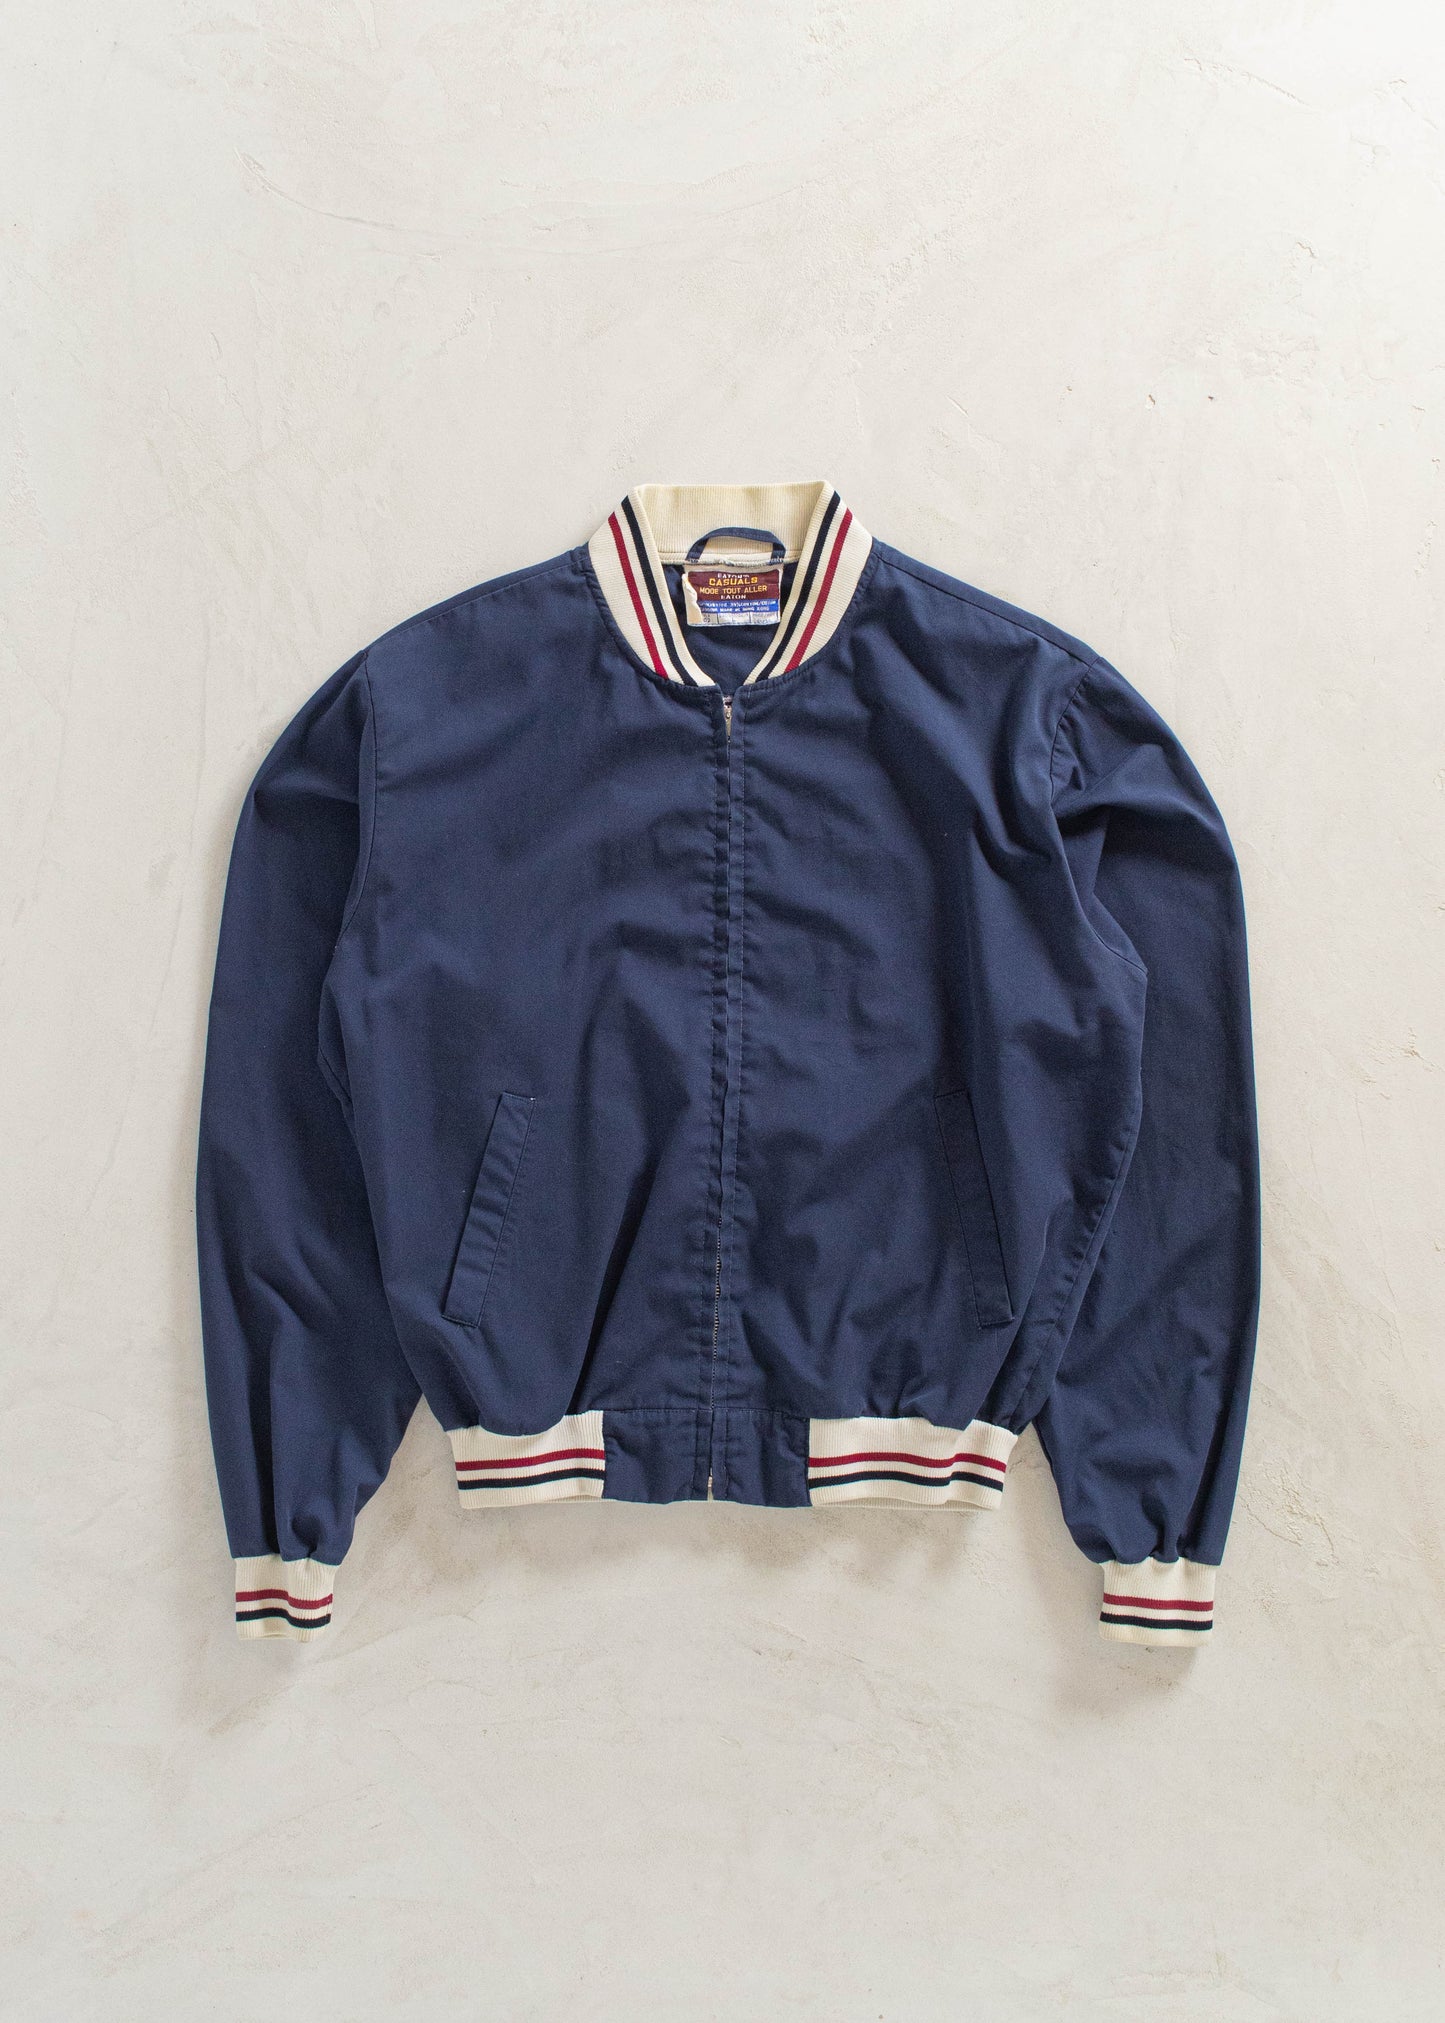 1980s Eatons Cotton Bomber Jacket Size M/L